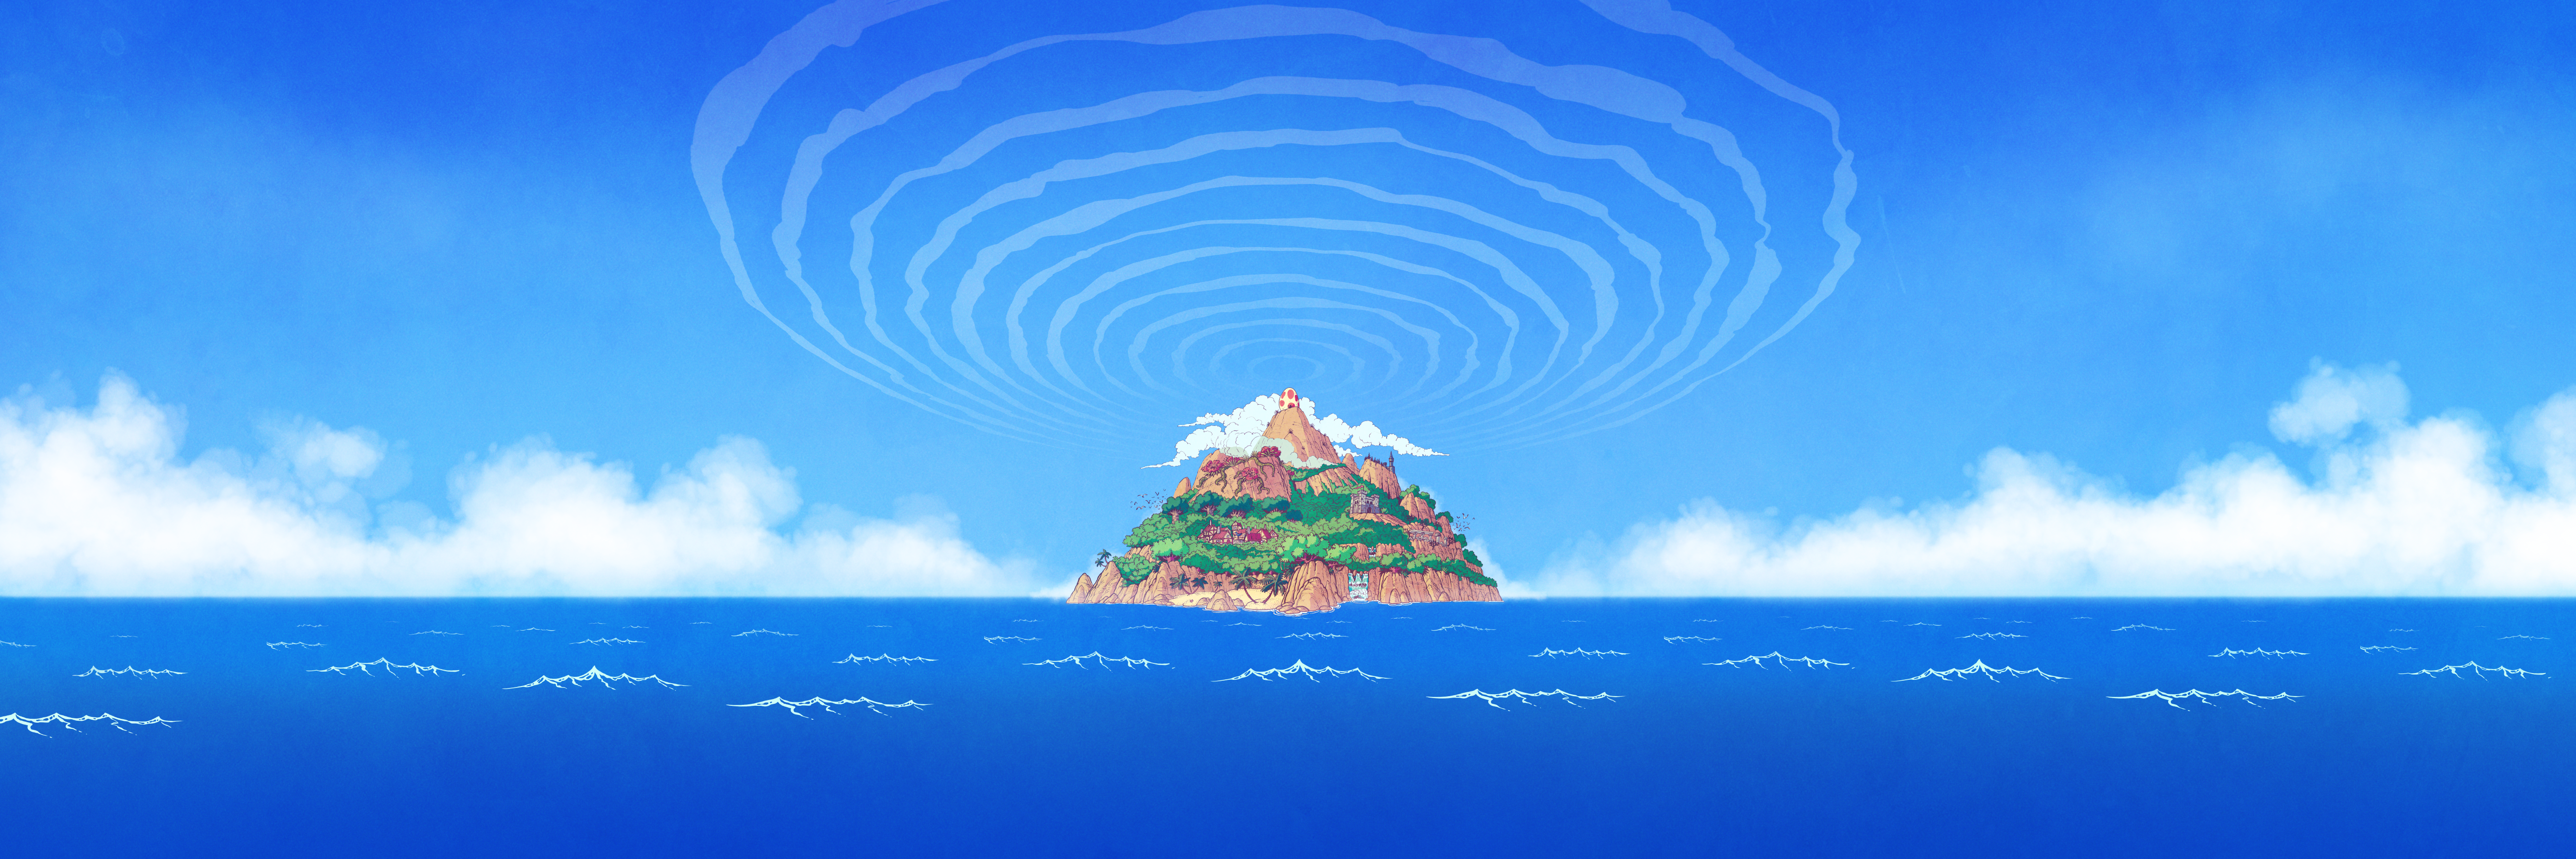 [FAN] Zelda: Link’s Awakening Artwork_ocean